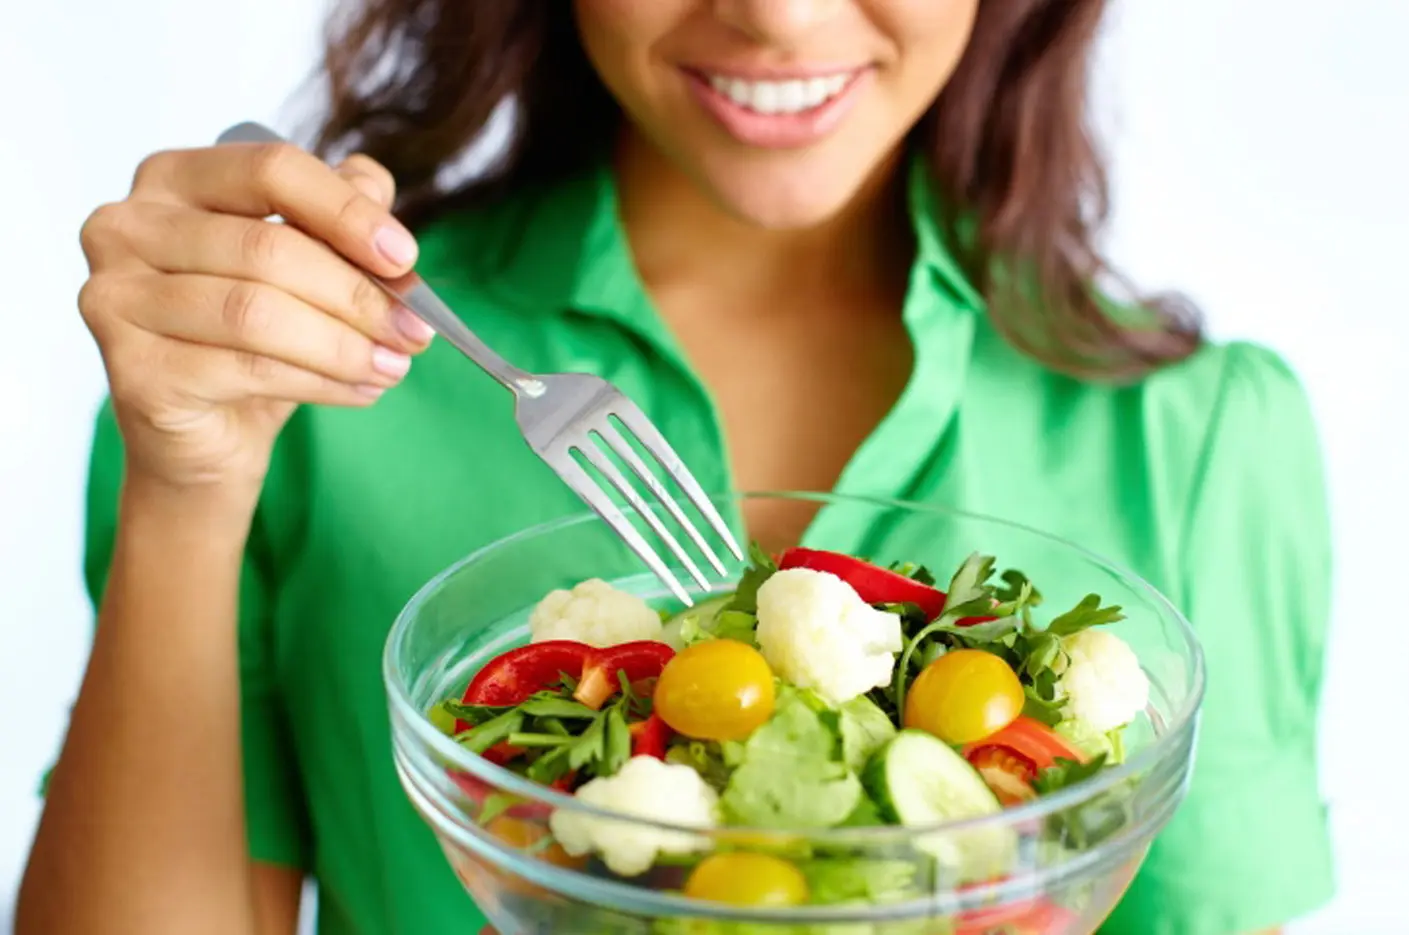 Jangan sampai kurang makan sayur kalau nggak mau gemuk ya, girls! (Sumber Foto: fashionhoster.com)